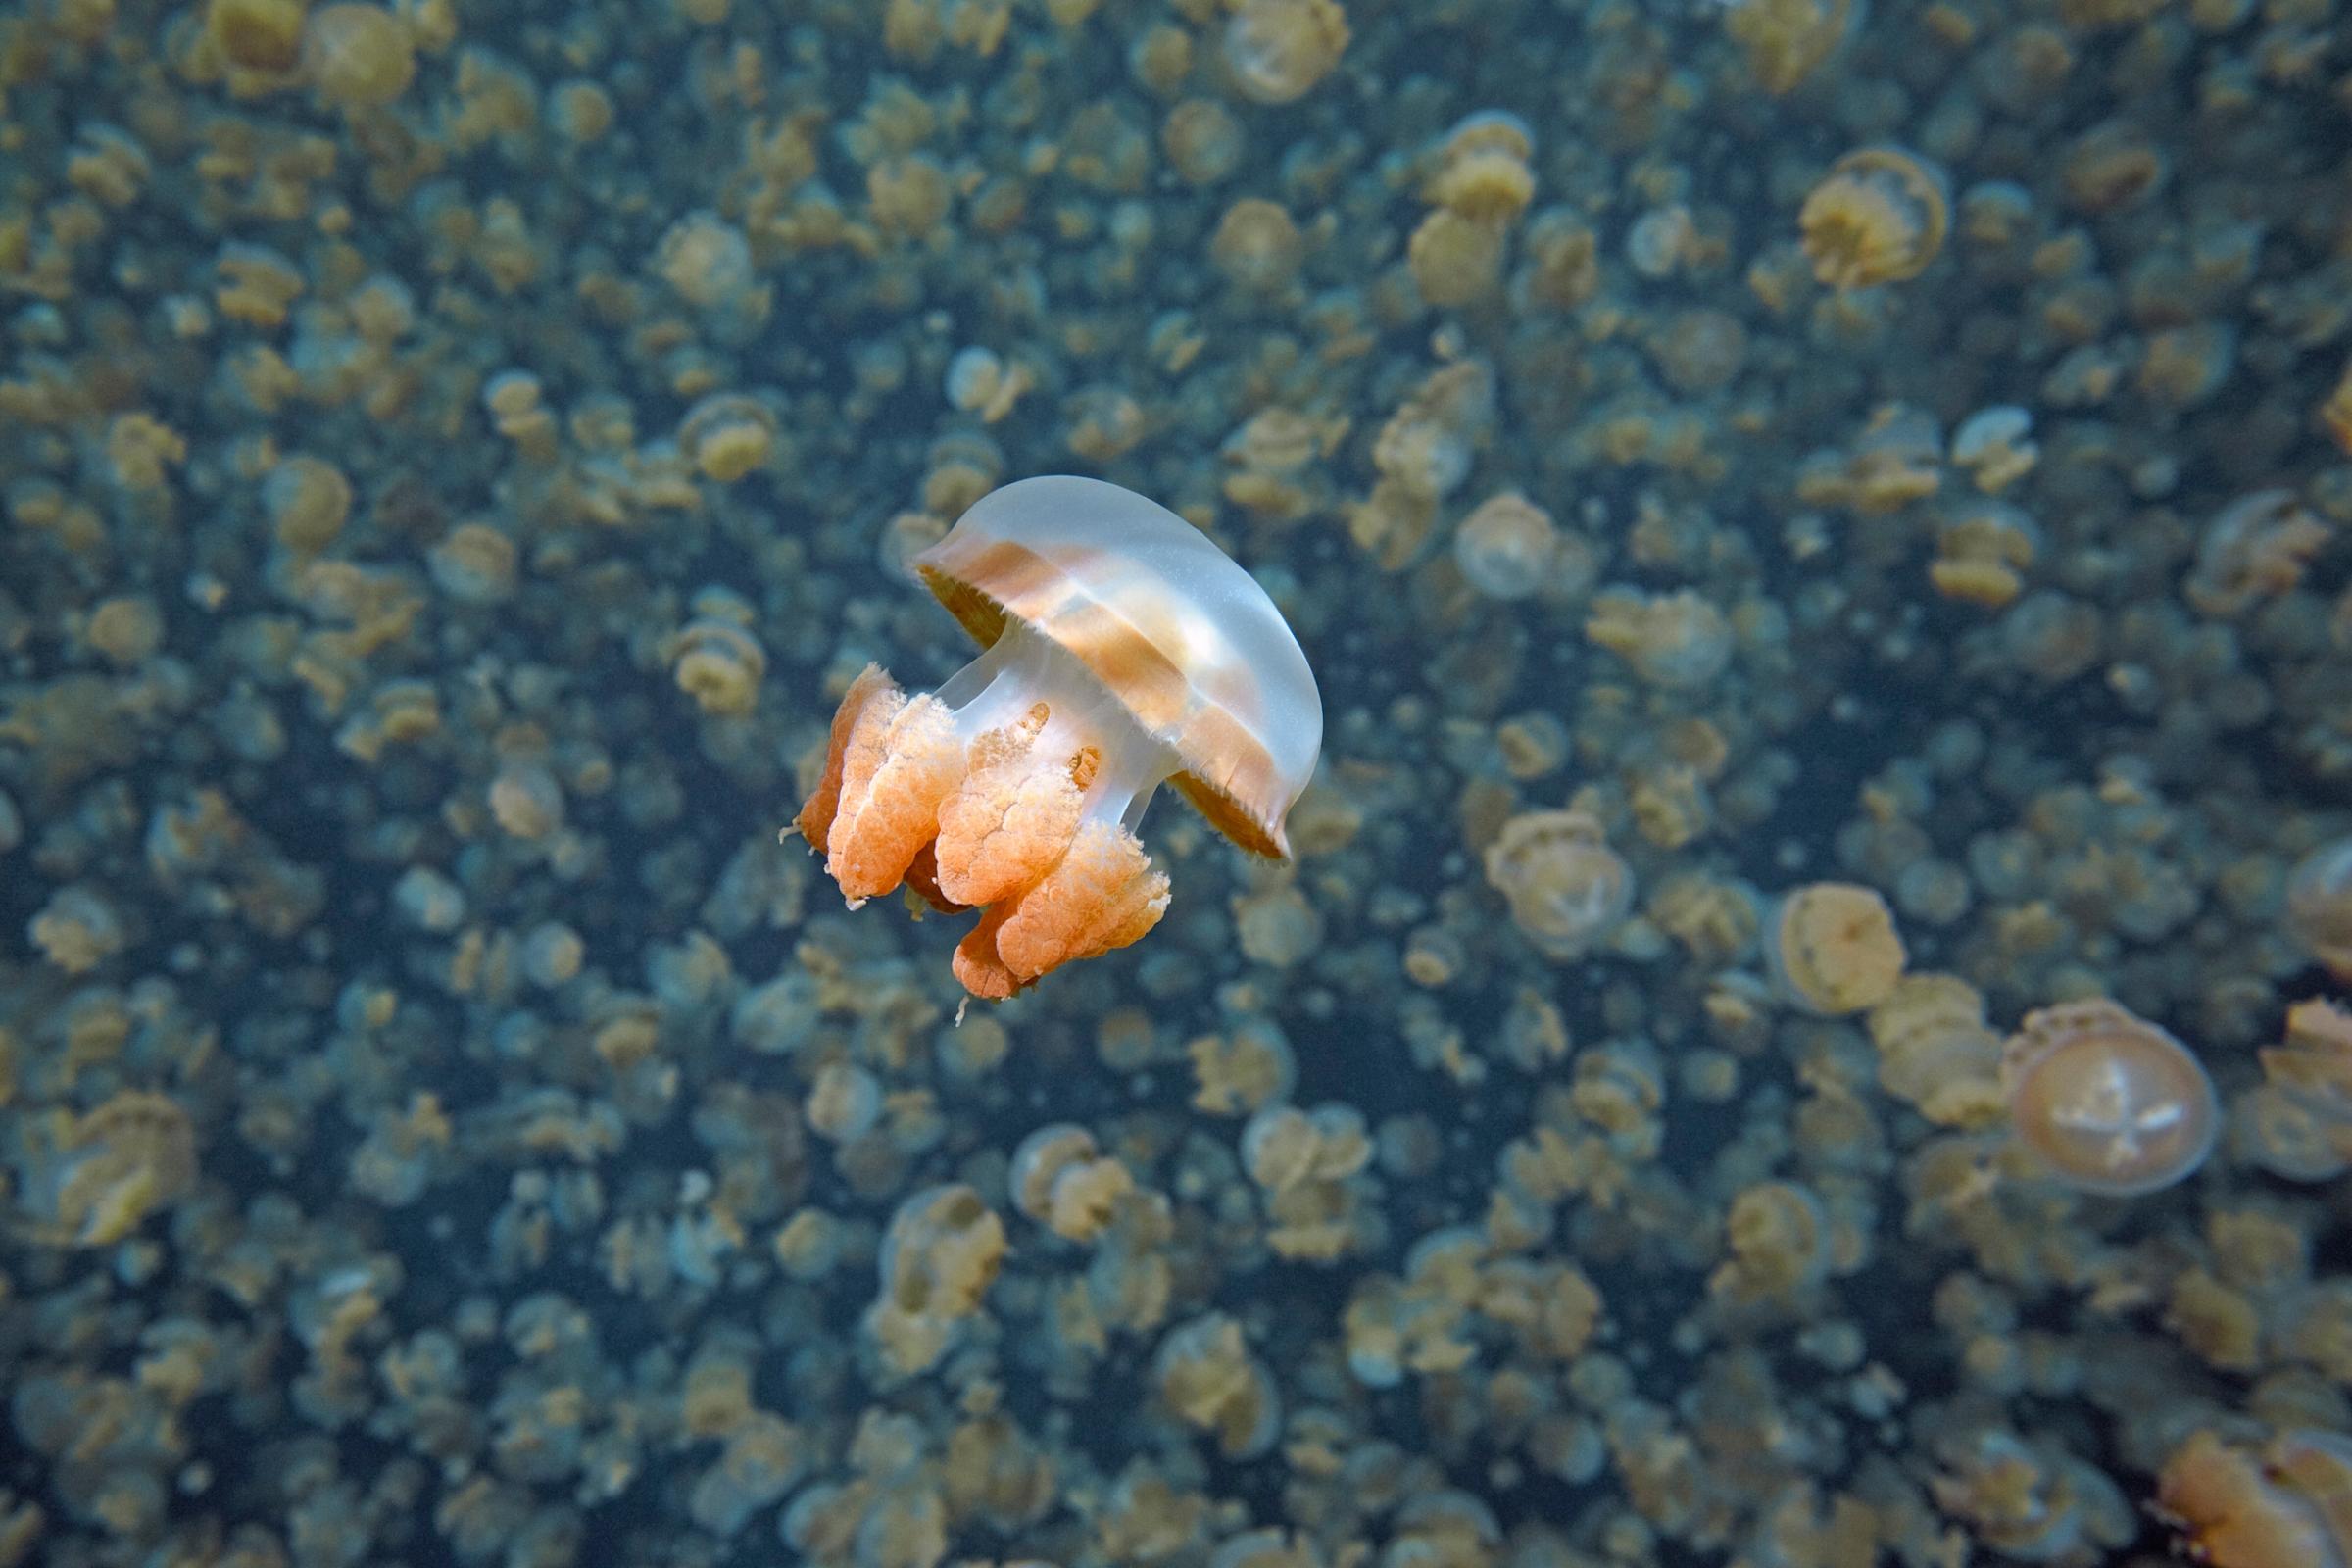 31 Mar 2009, Eil Malk, Palau --- Mastigias jellyfish (Mastigias sp) with mass of jellyfish in background, Jellyfish lake, Palau, Western Pacific Islands, Micronesia --- Image by © Ingo Arndt/Nature Picture Library/Corbis